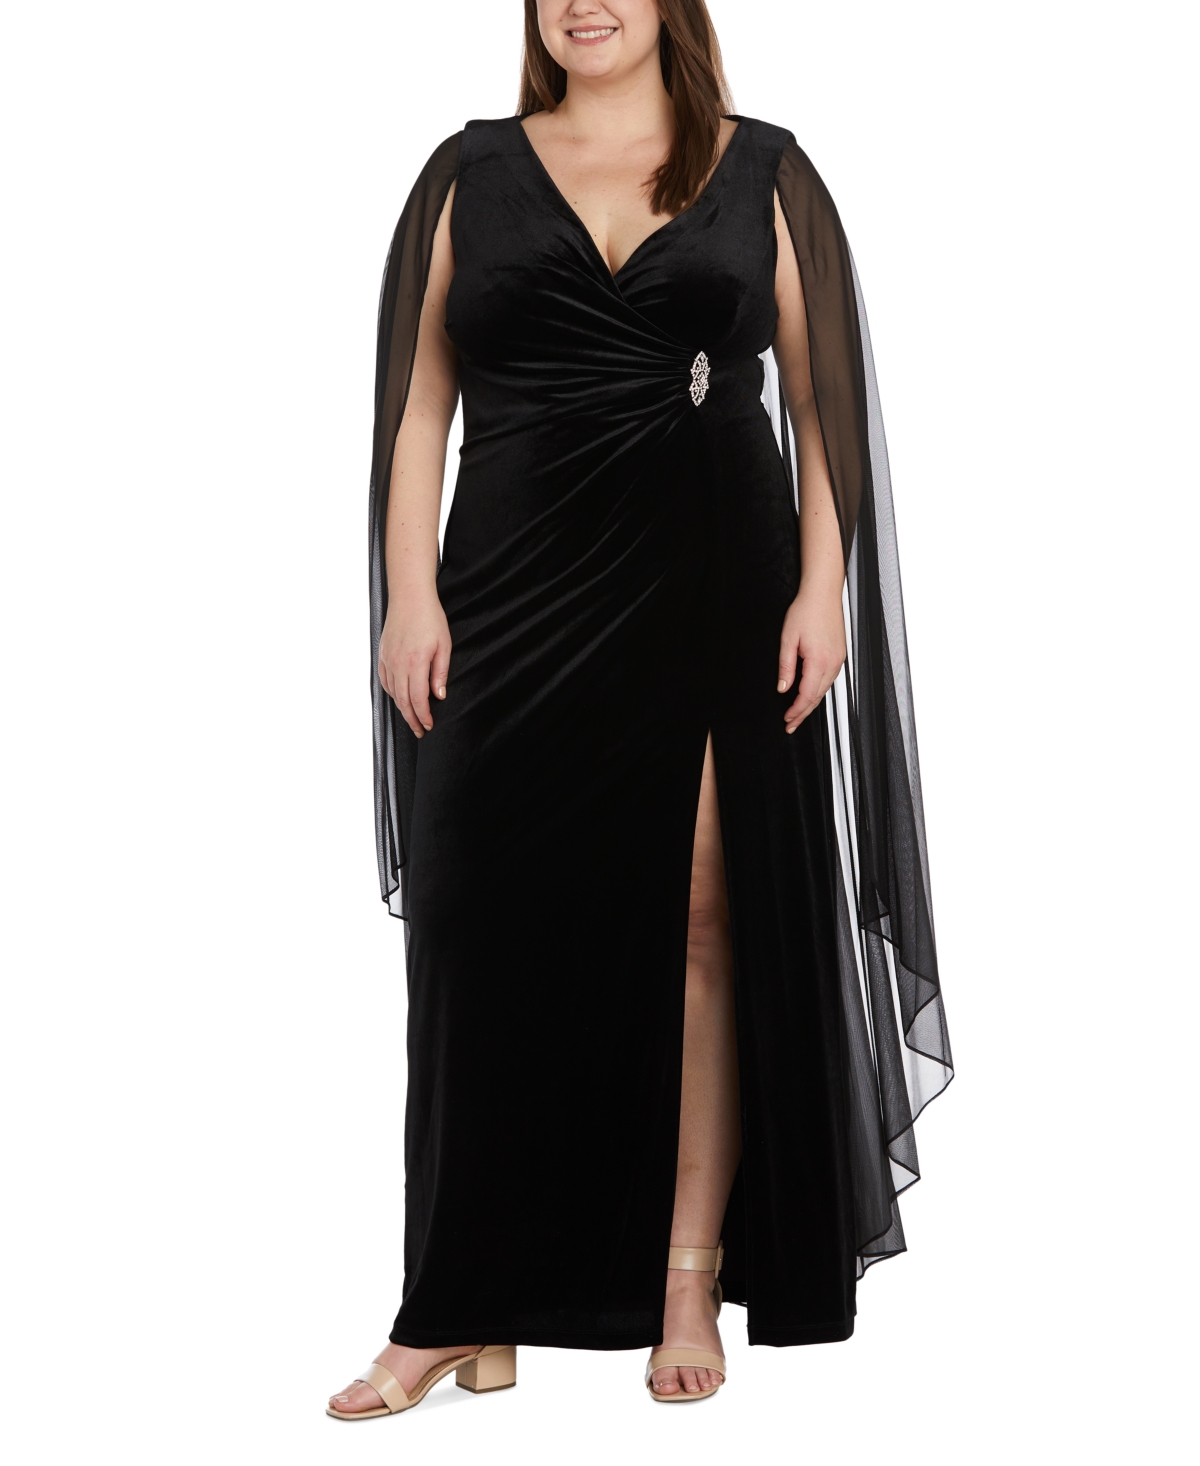 1970s Formal Dress, Evening Gown Photos R  M Richards Plus Size Draped-Shoulder Side-Ruched Gown - Black $129.00 AT vintagedancer.com